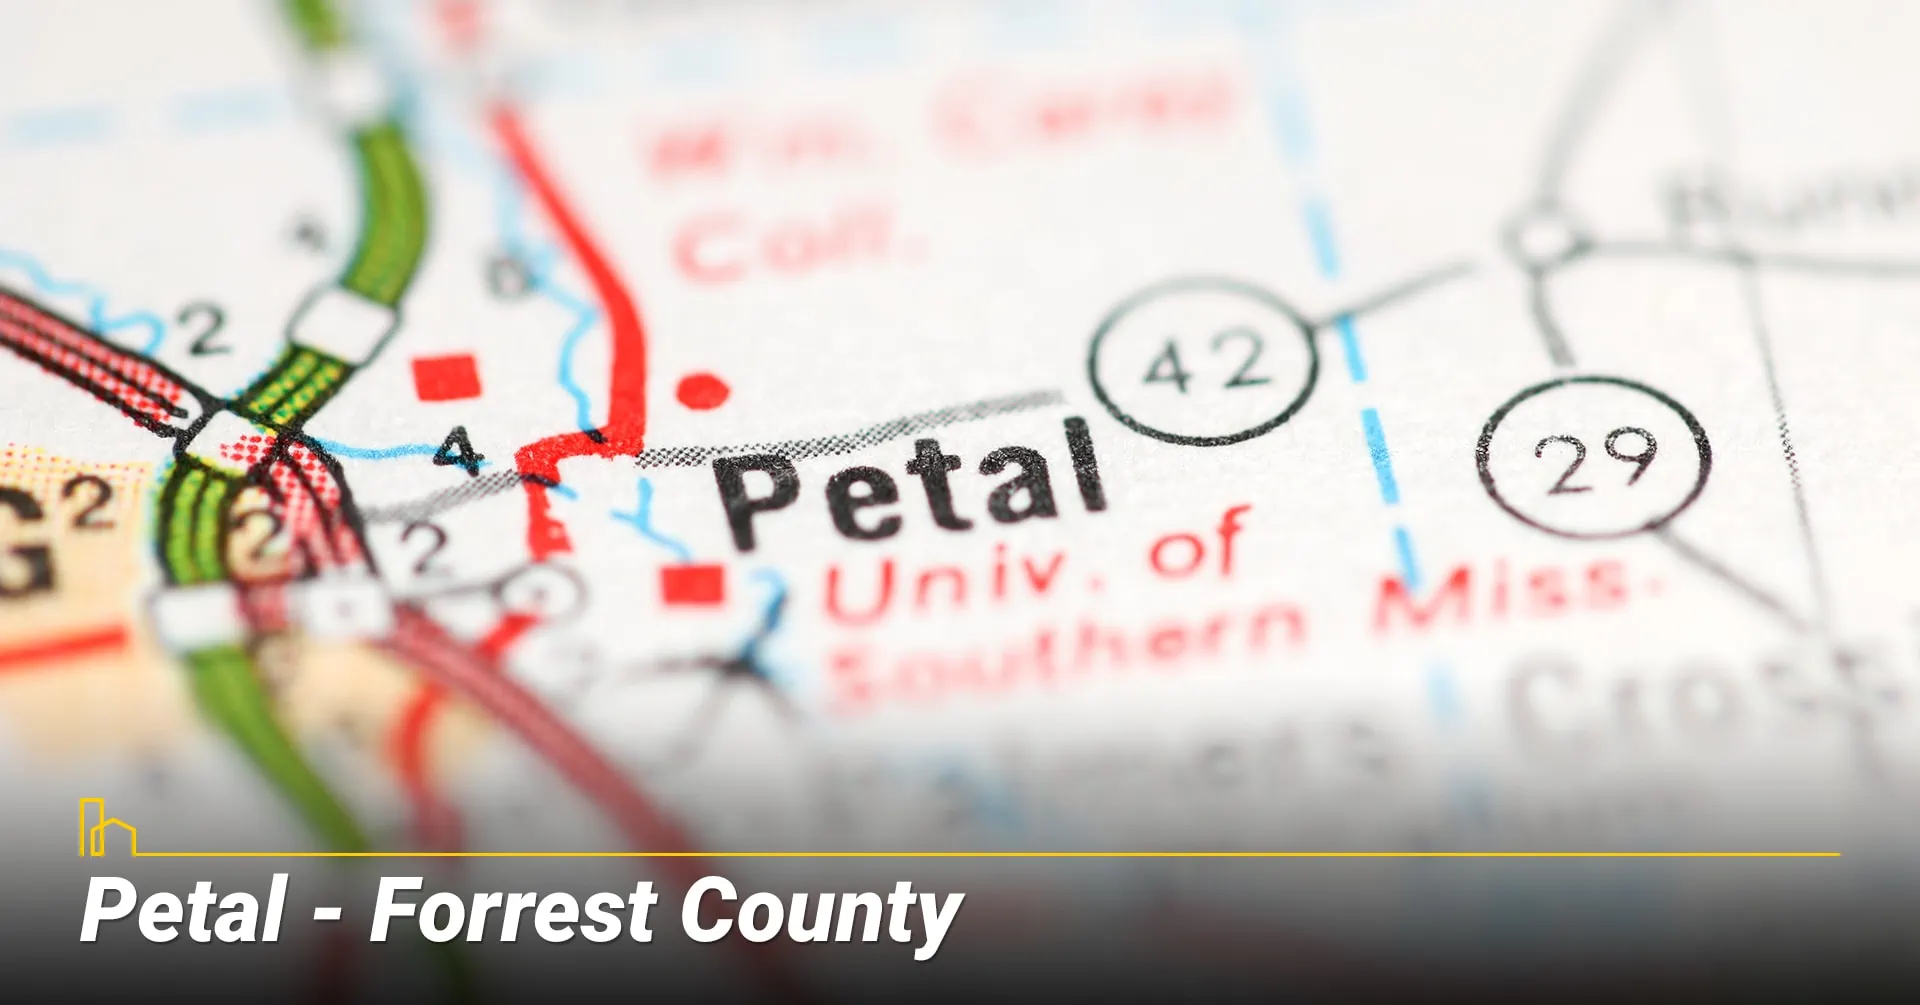 Petal - Forrest County